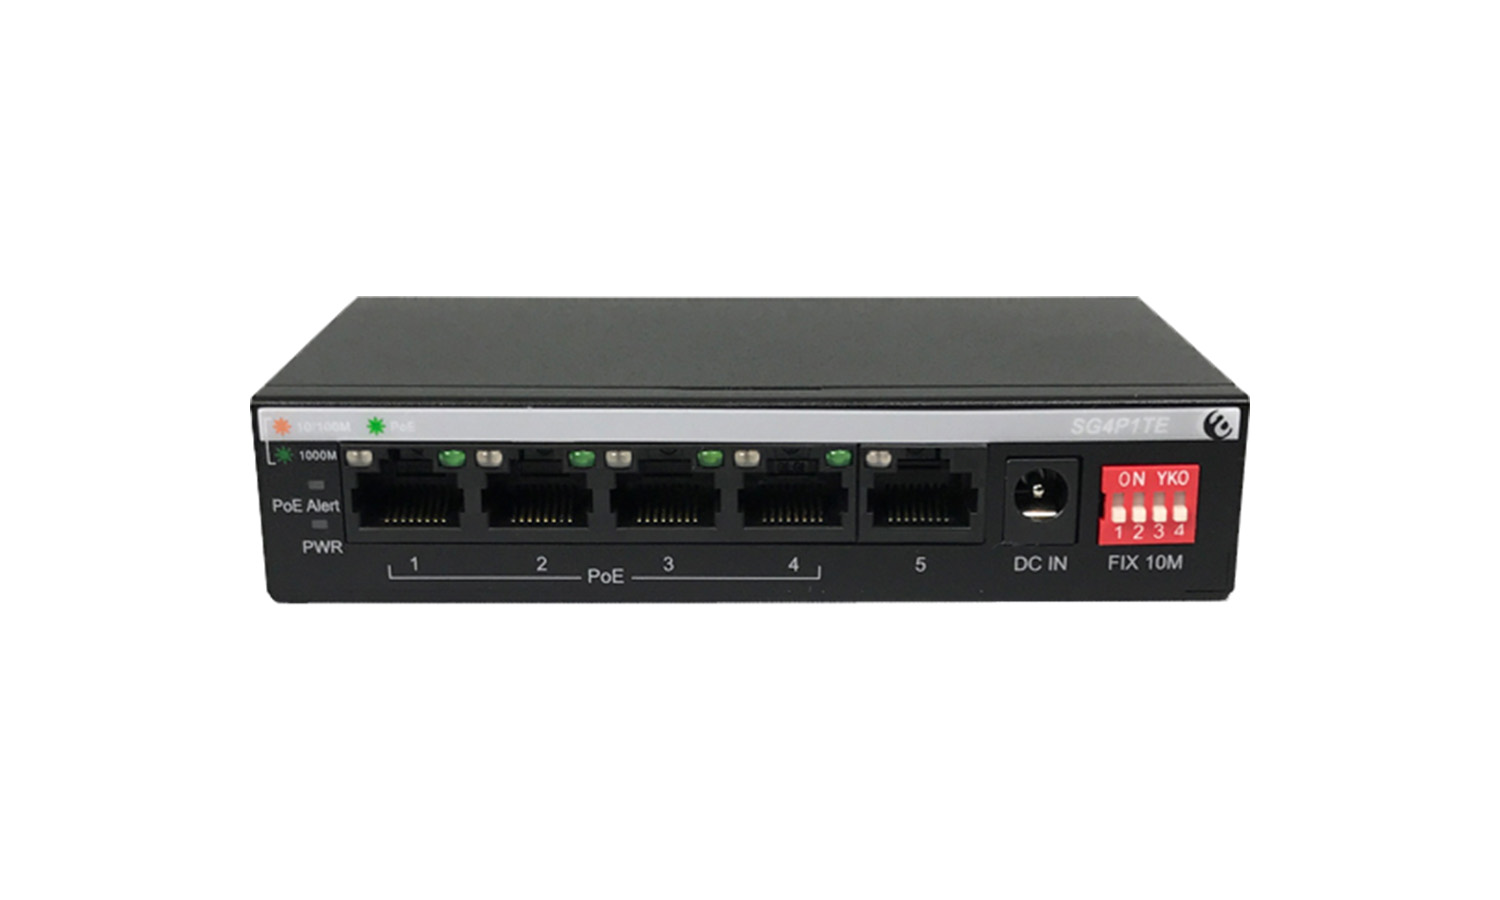 BG-4P1TE 5 port 10/100/1000 Mbps Gigabit Ethernet switch by BZBGEAR